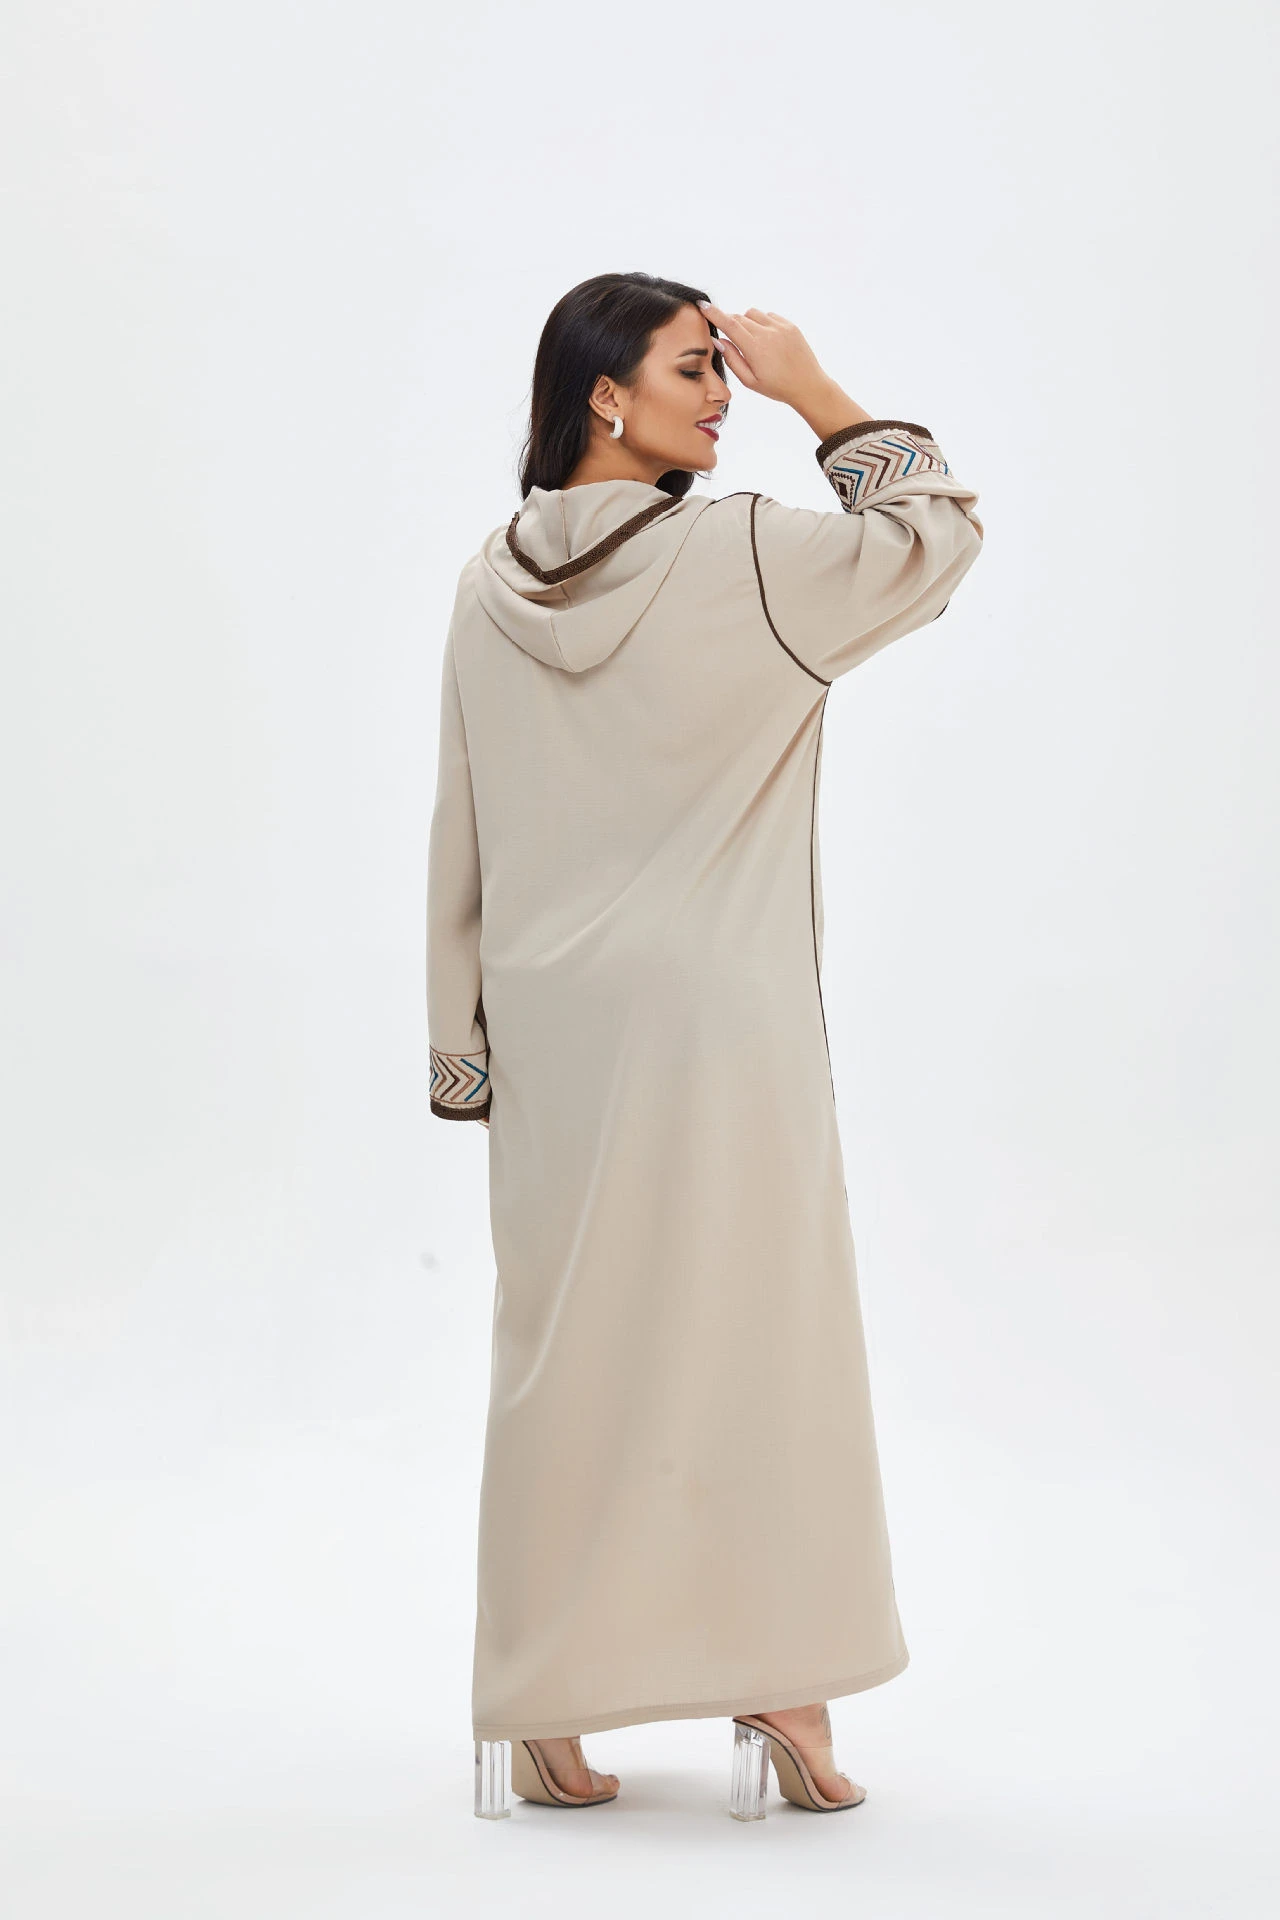 Kaftan Dress Dubai Embroidery Islamic Women Dress Long Sleeve Muslim Dress Abaya With Hood